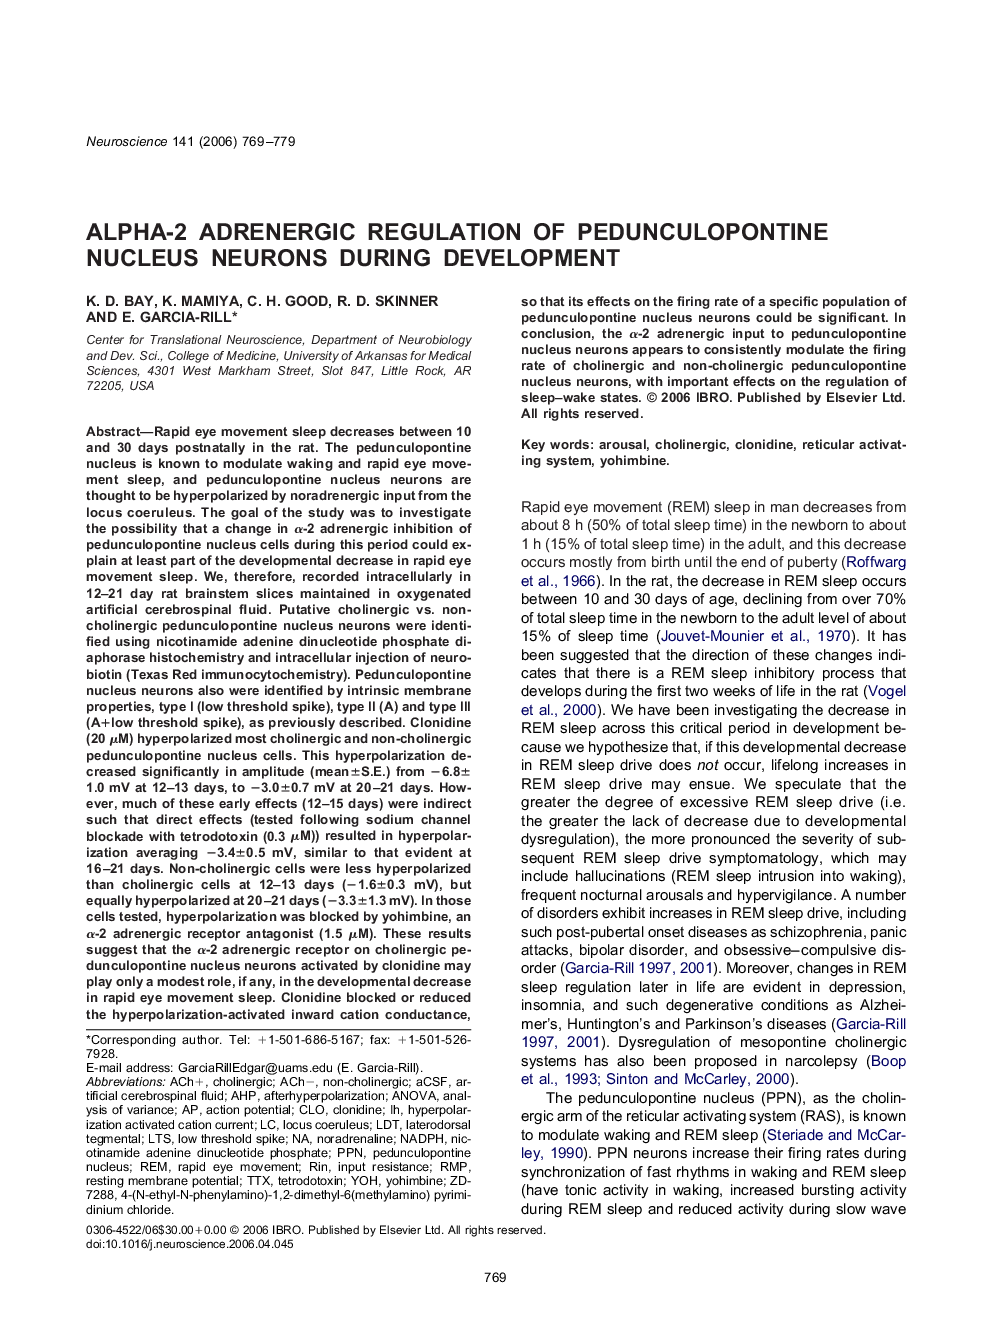 Alpha-2 adrenergic regulation of pedunculopontine nucleus neurons during development